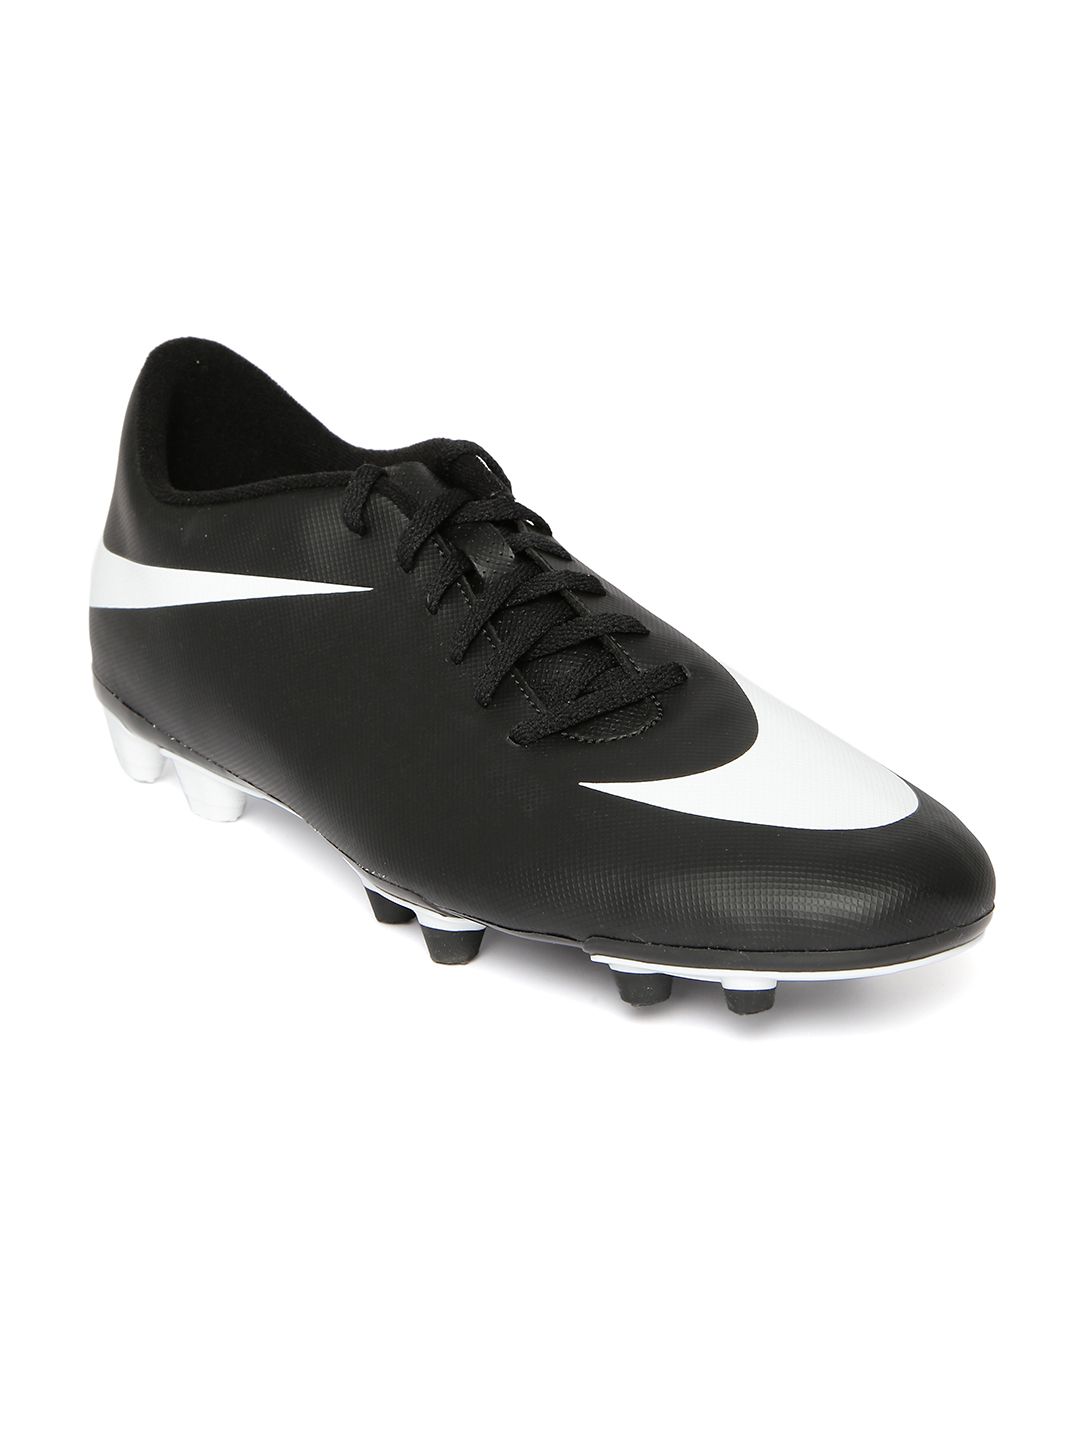 Nike 768919 011 Men Black Bravata Fg Football Shoes Best Price